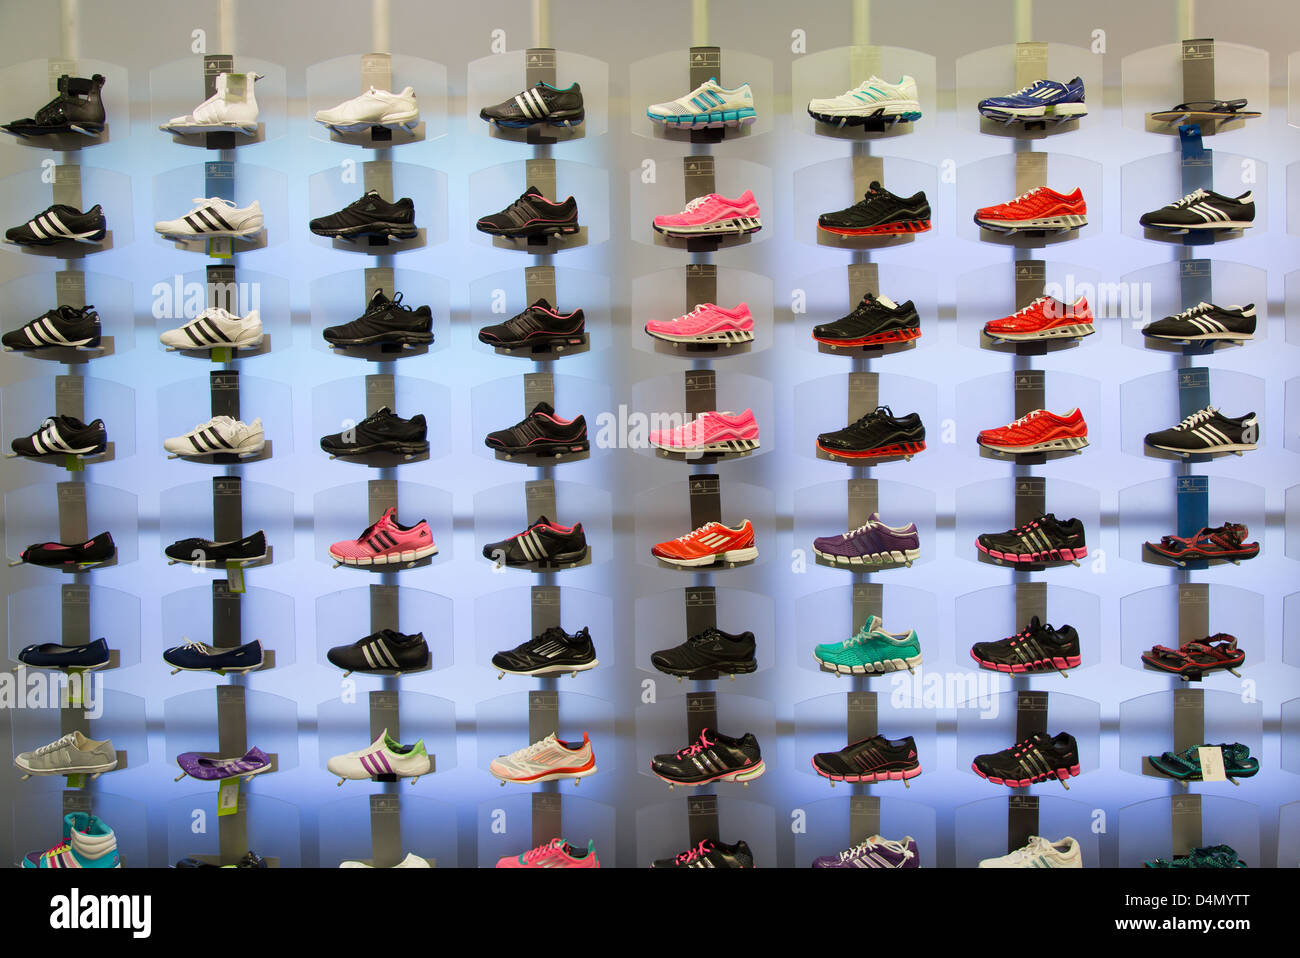 shoes adidas shop